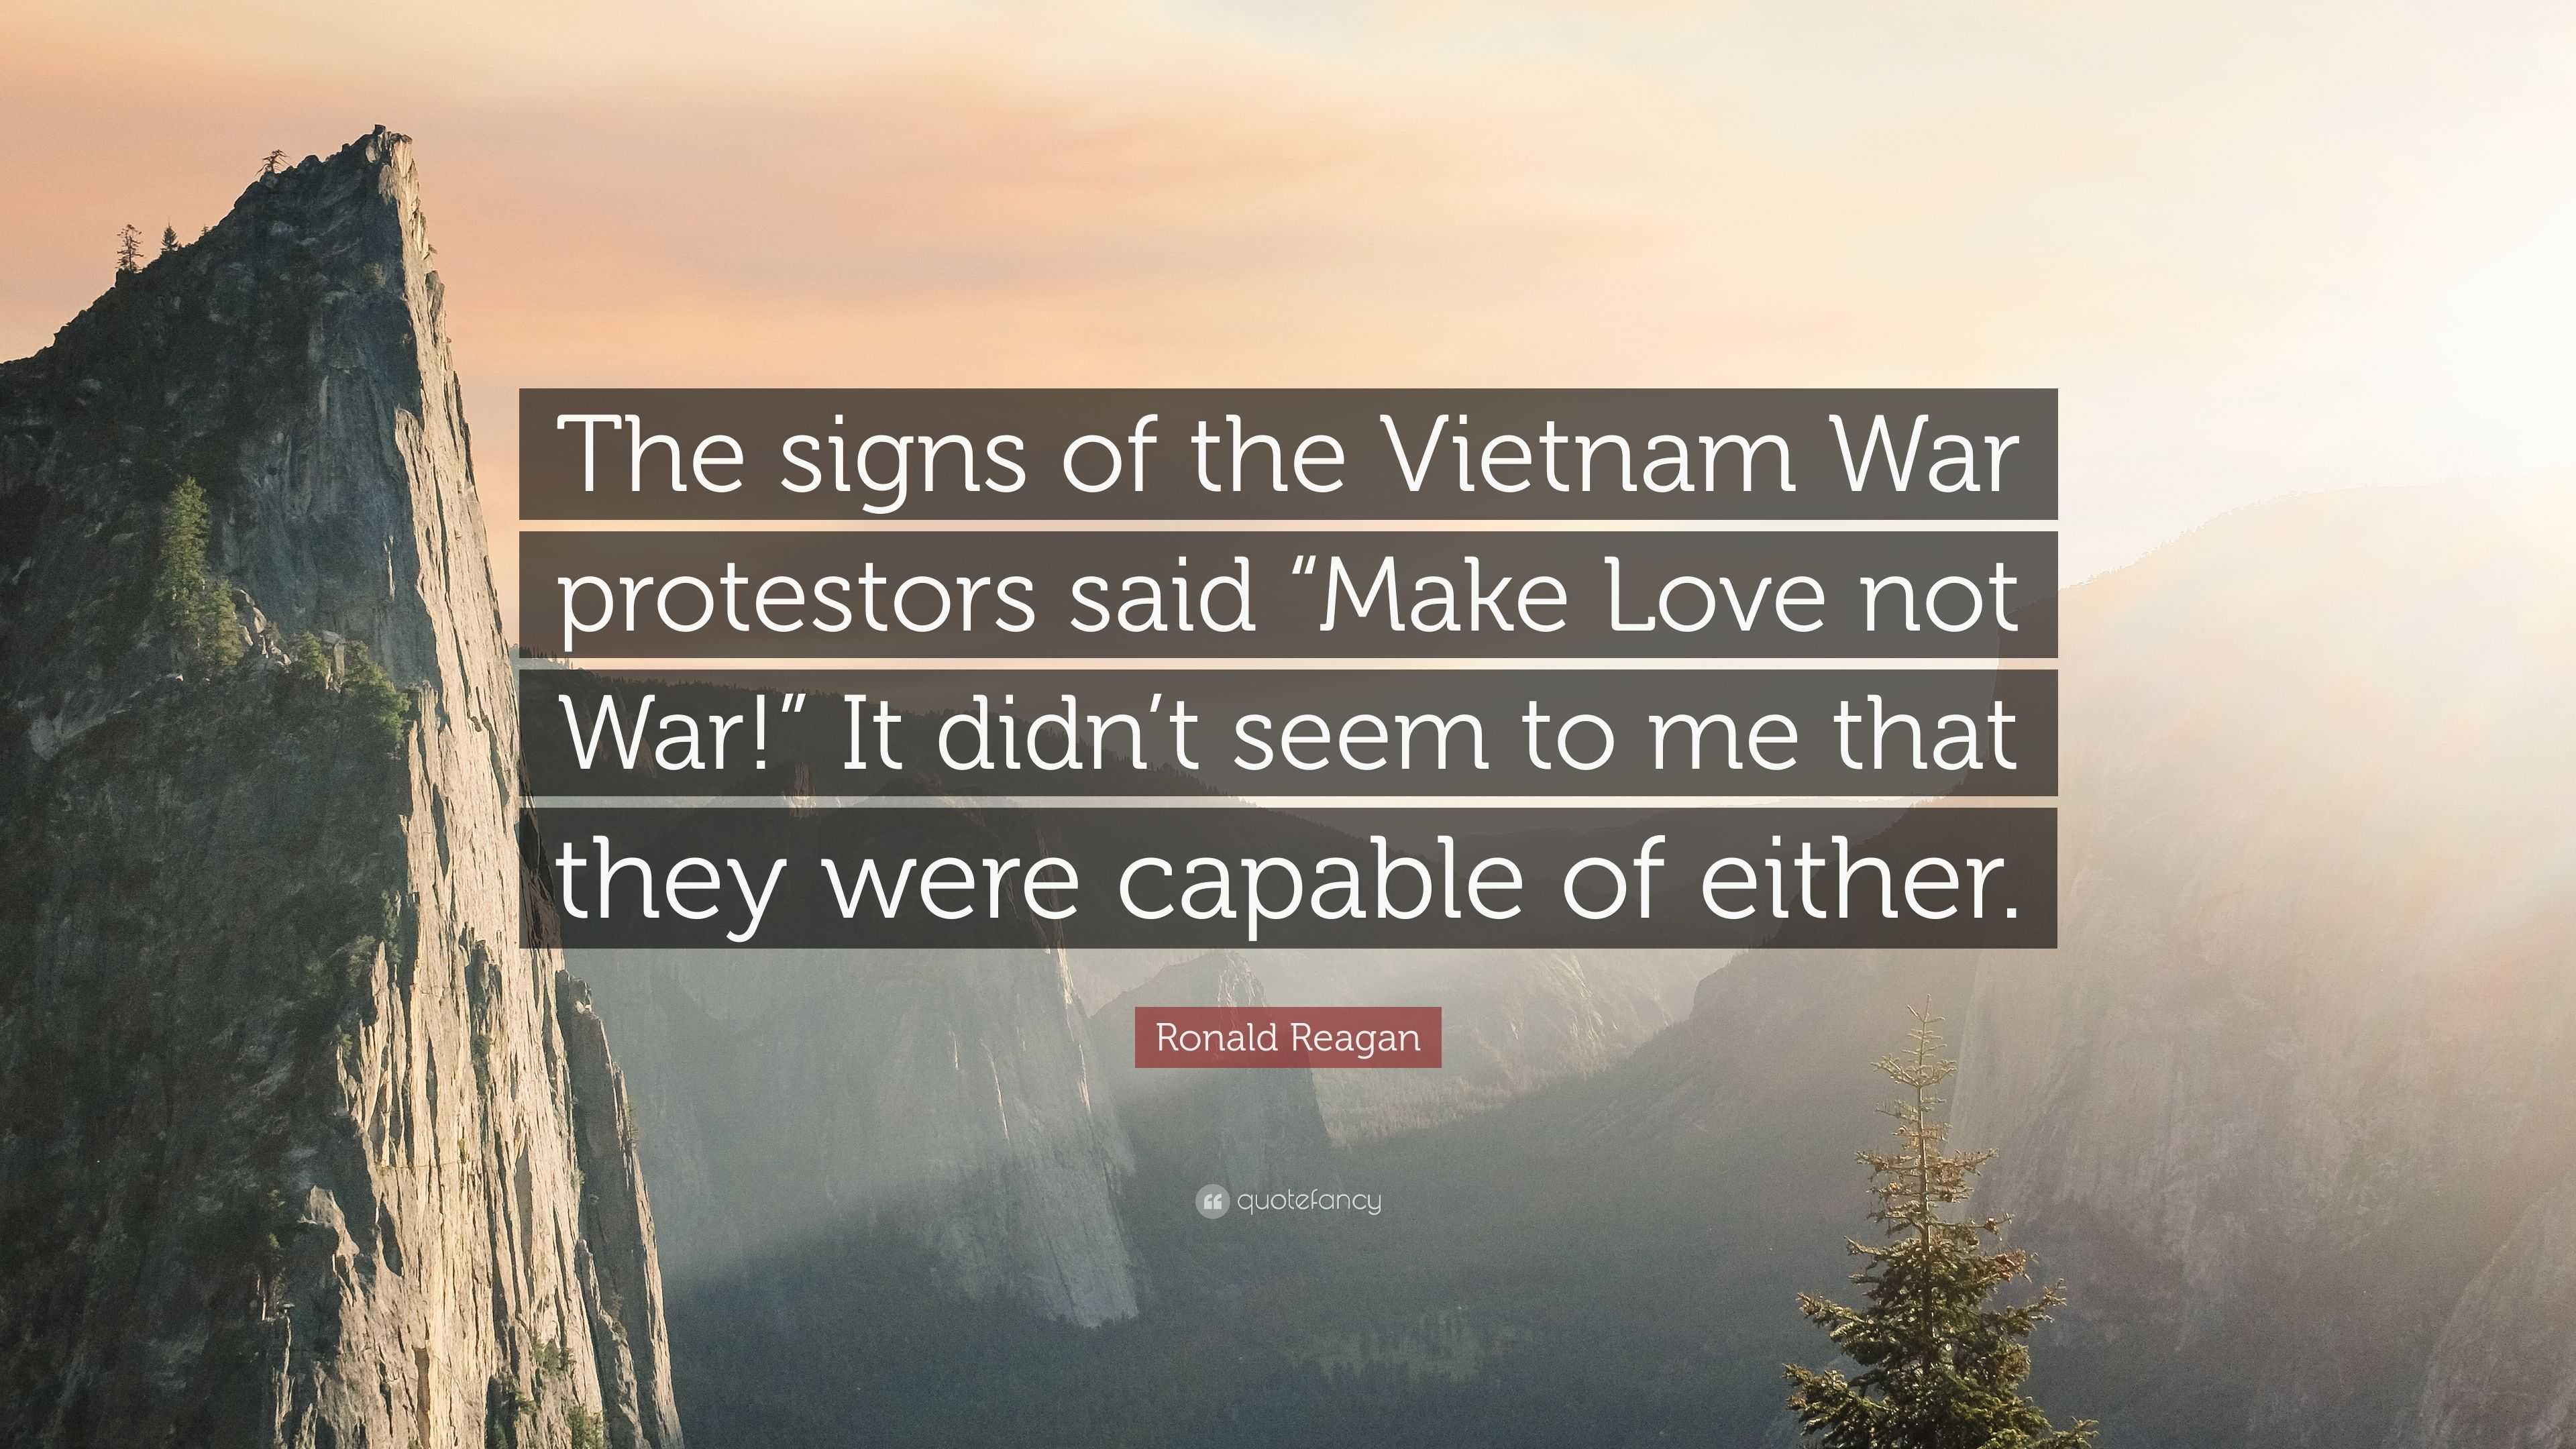 Ronald Reagan Quote “The signs of the Vietnam War protestors said “Make Love